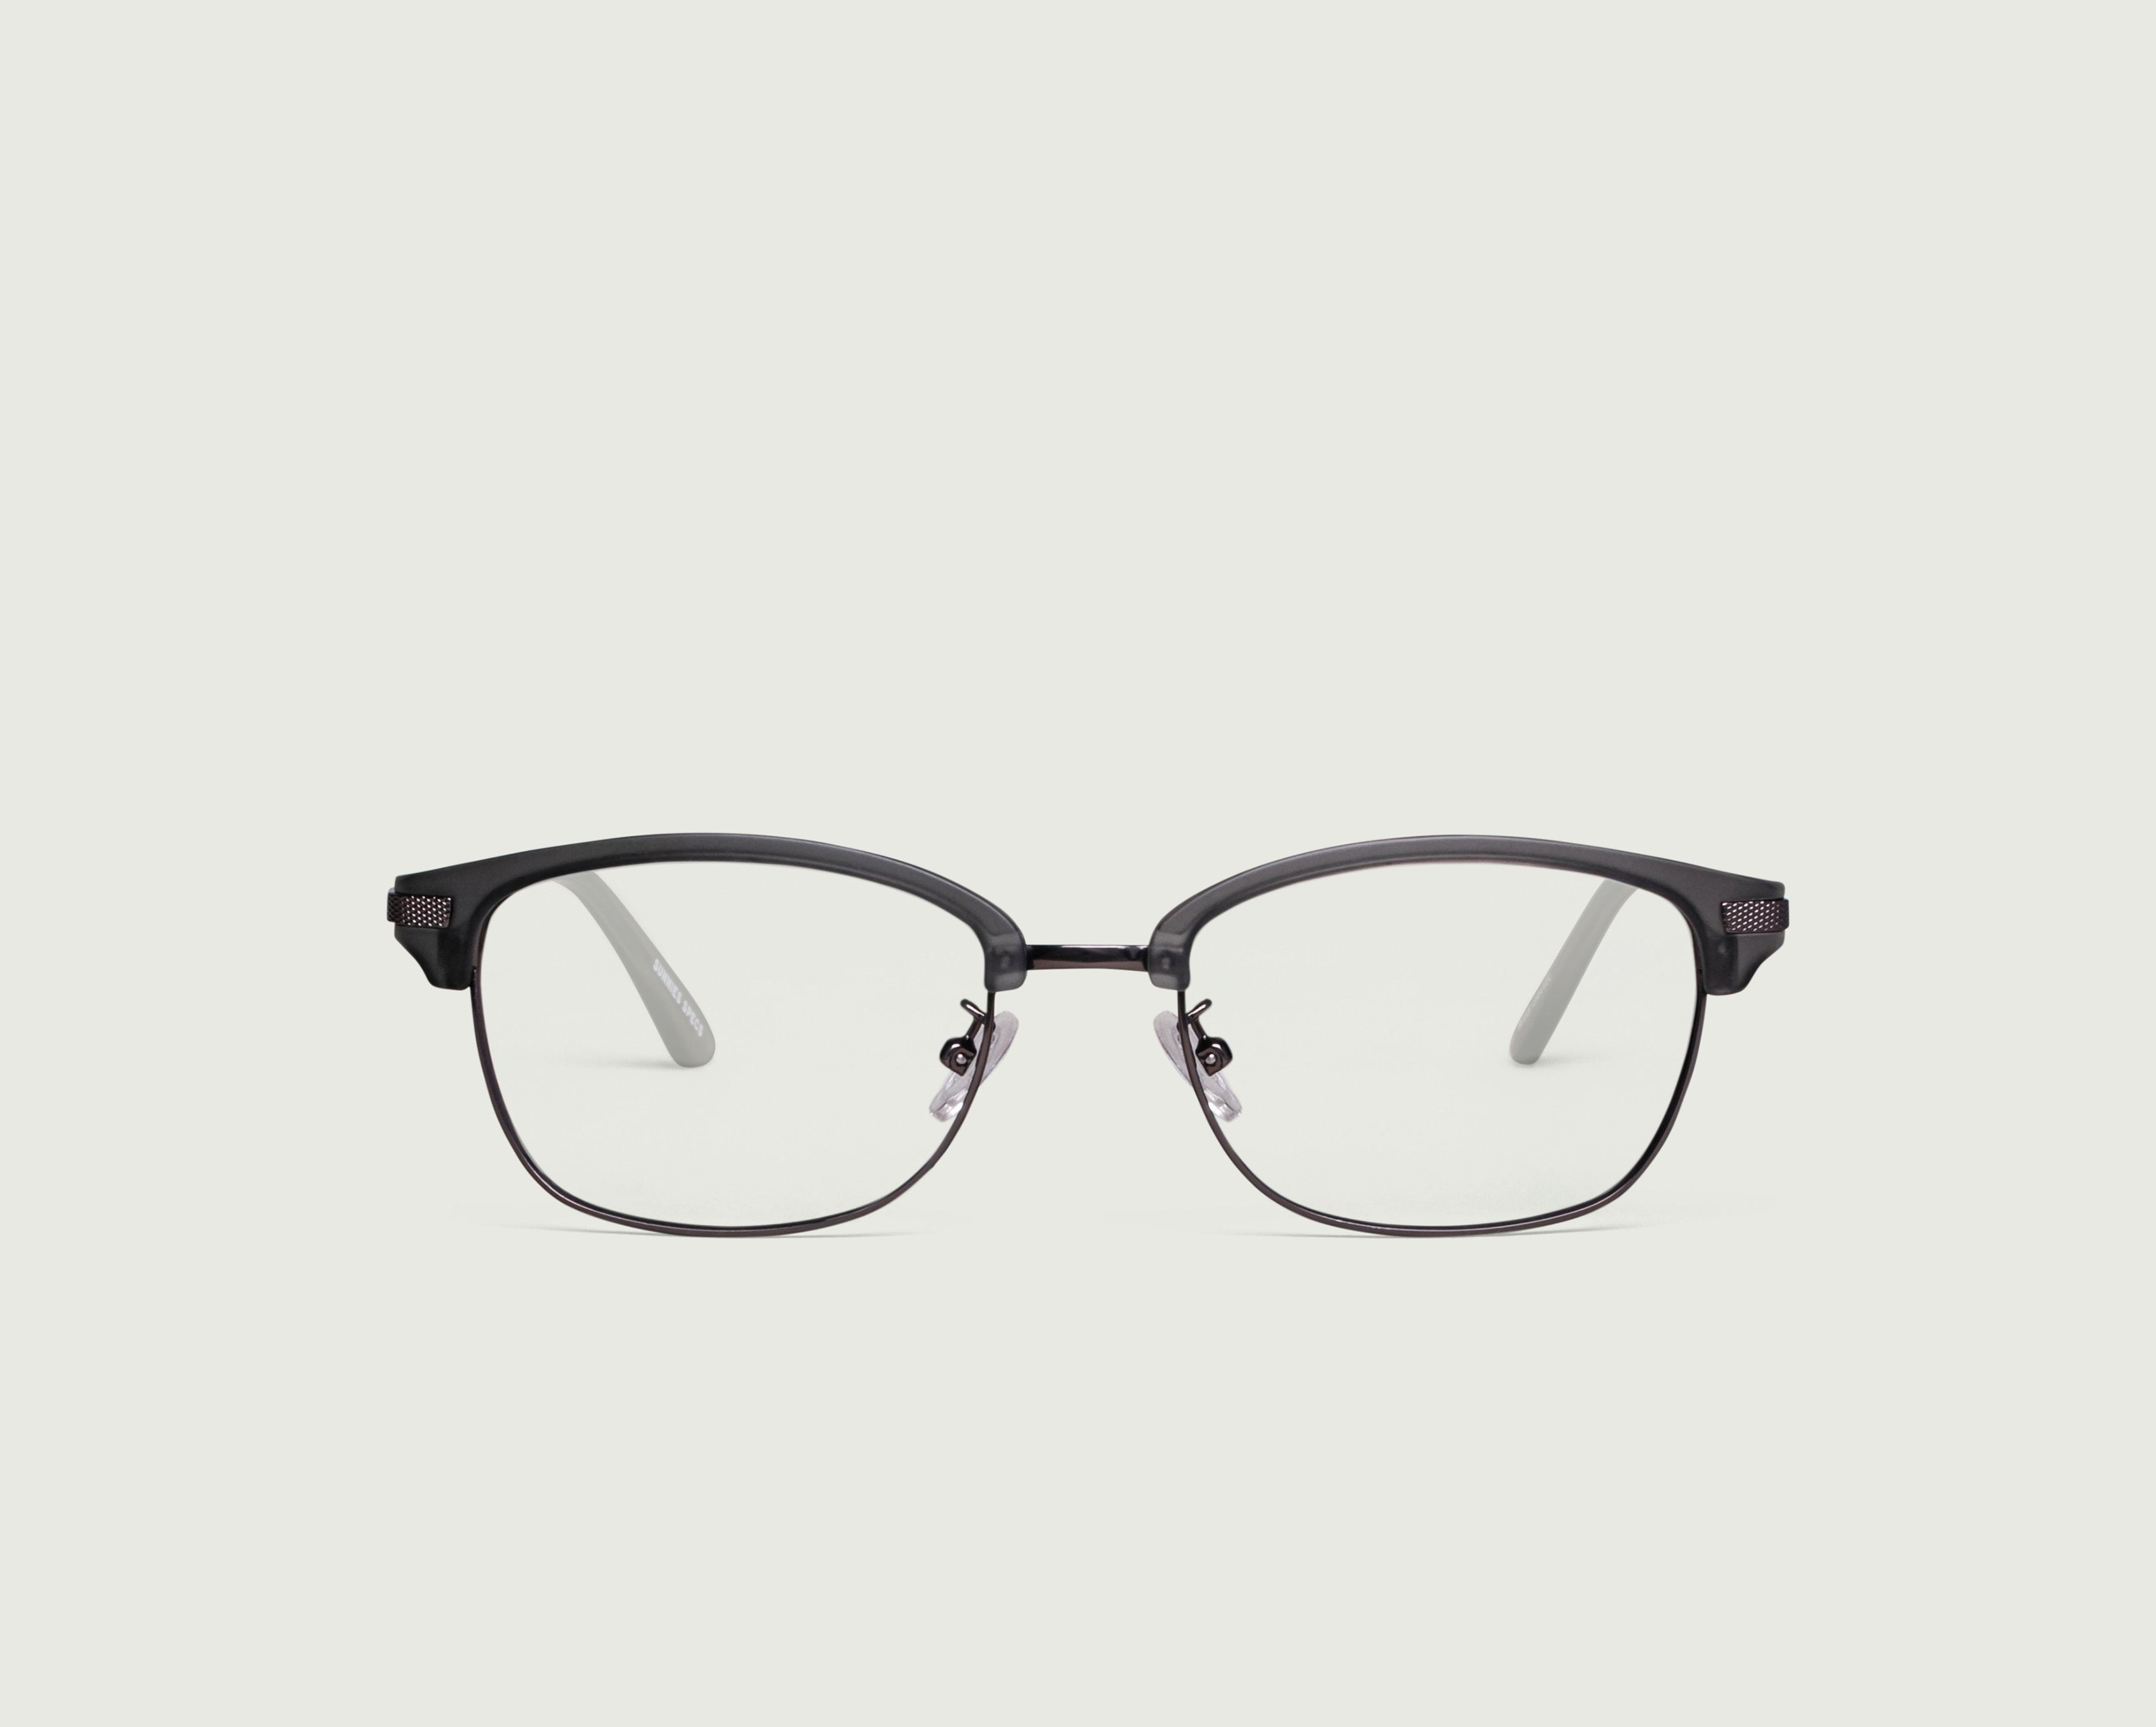 Gravel::Wes Eyeglasses browline gray plastic front